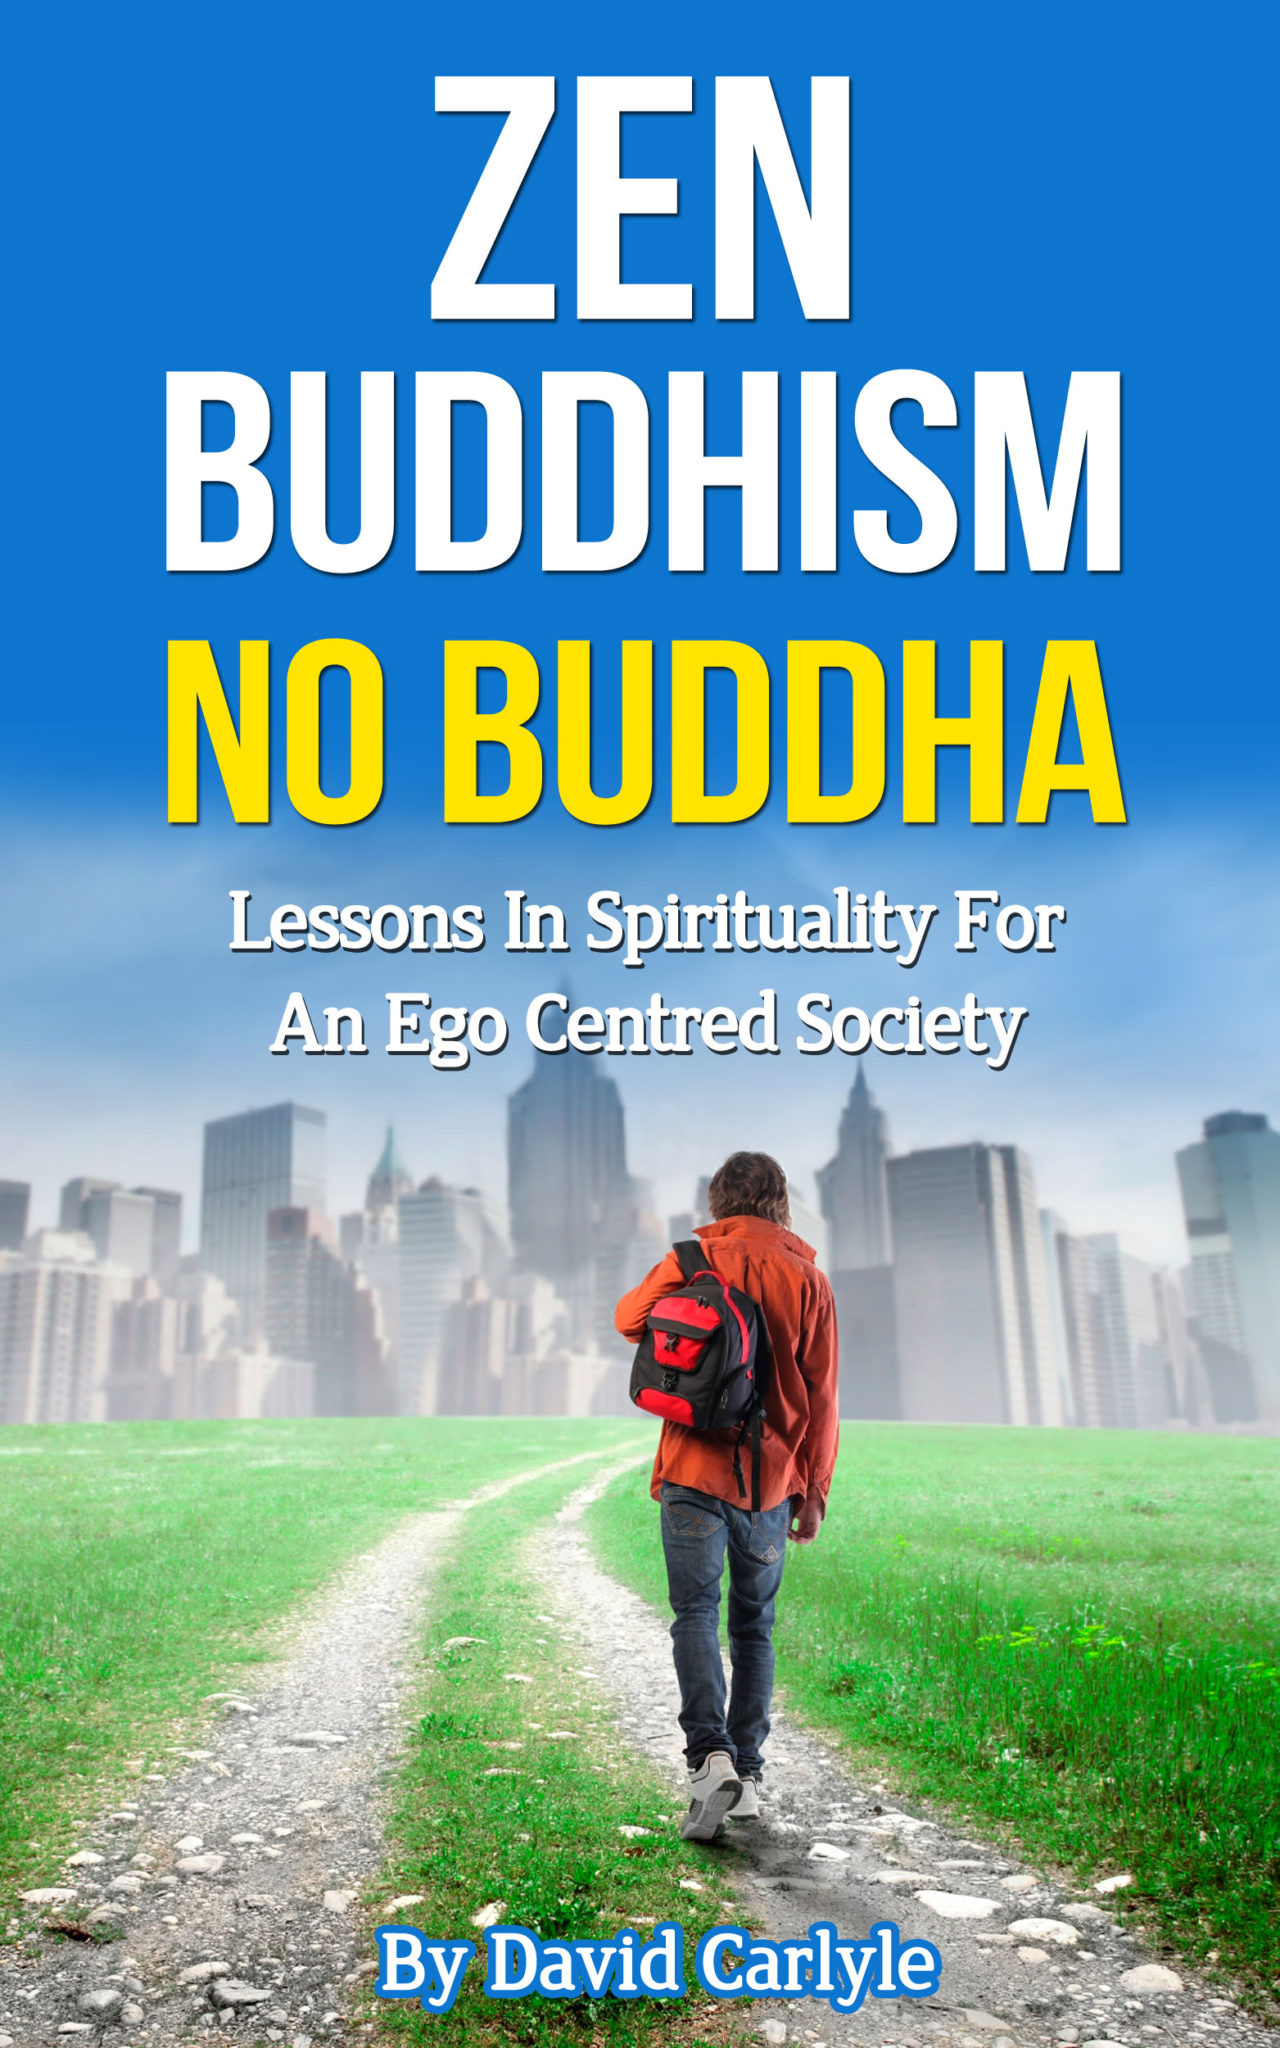 Zen Buddhism – No Buddha by David Carlyle